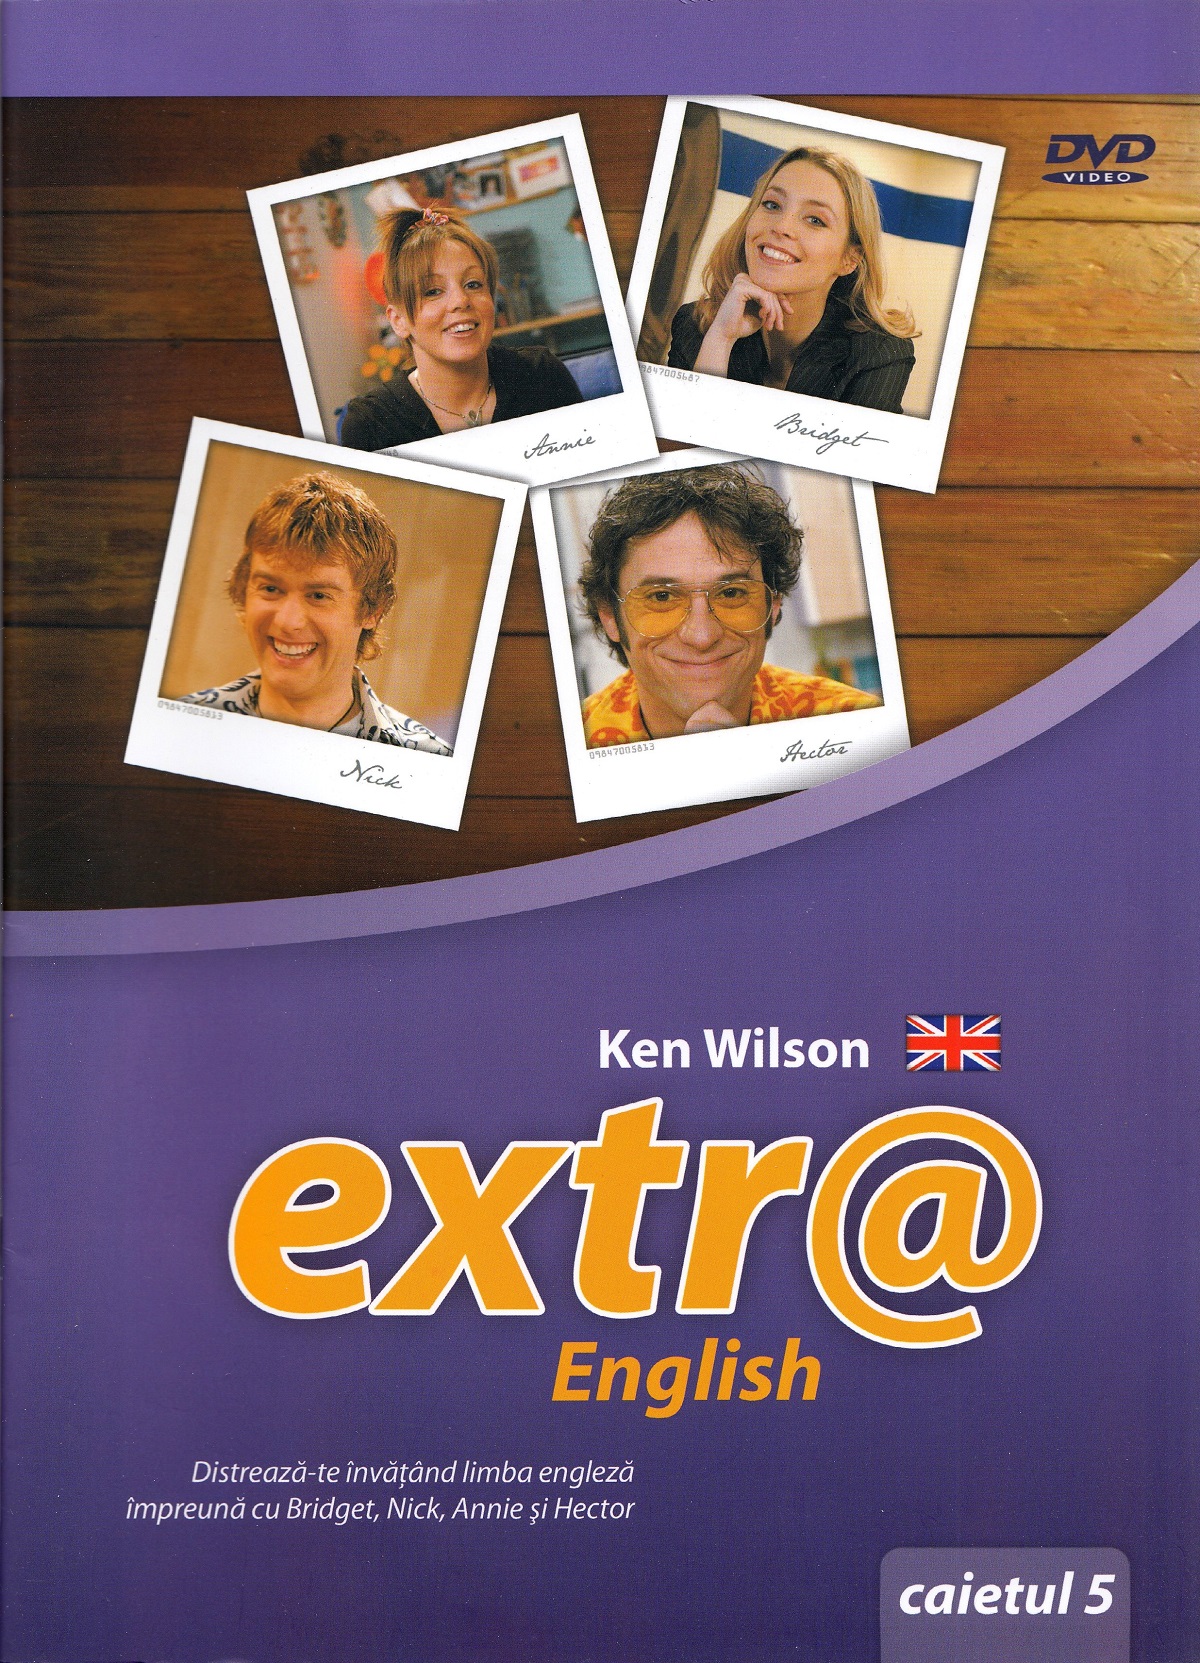 Extra English Nr.5 + DVD - Ken Wilson